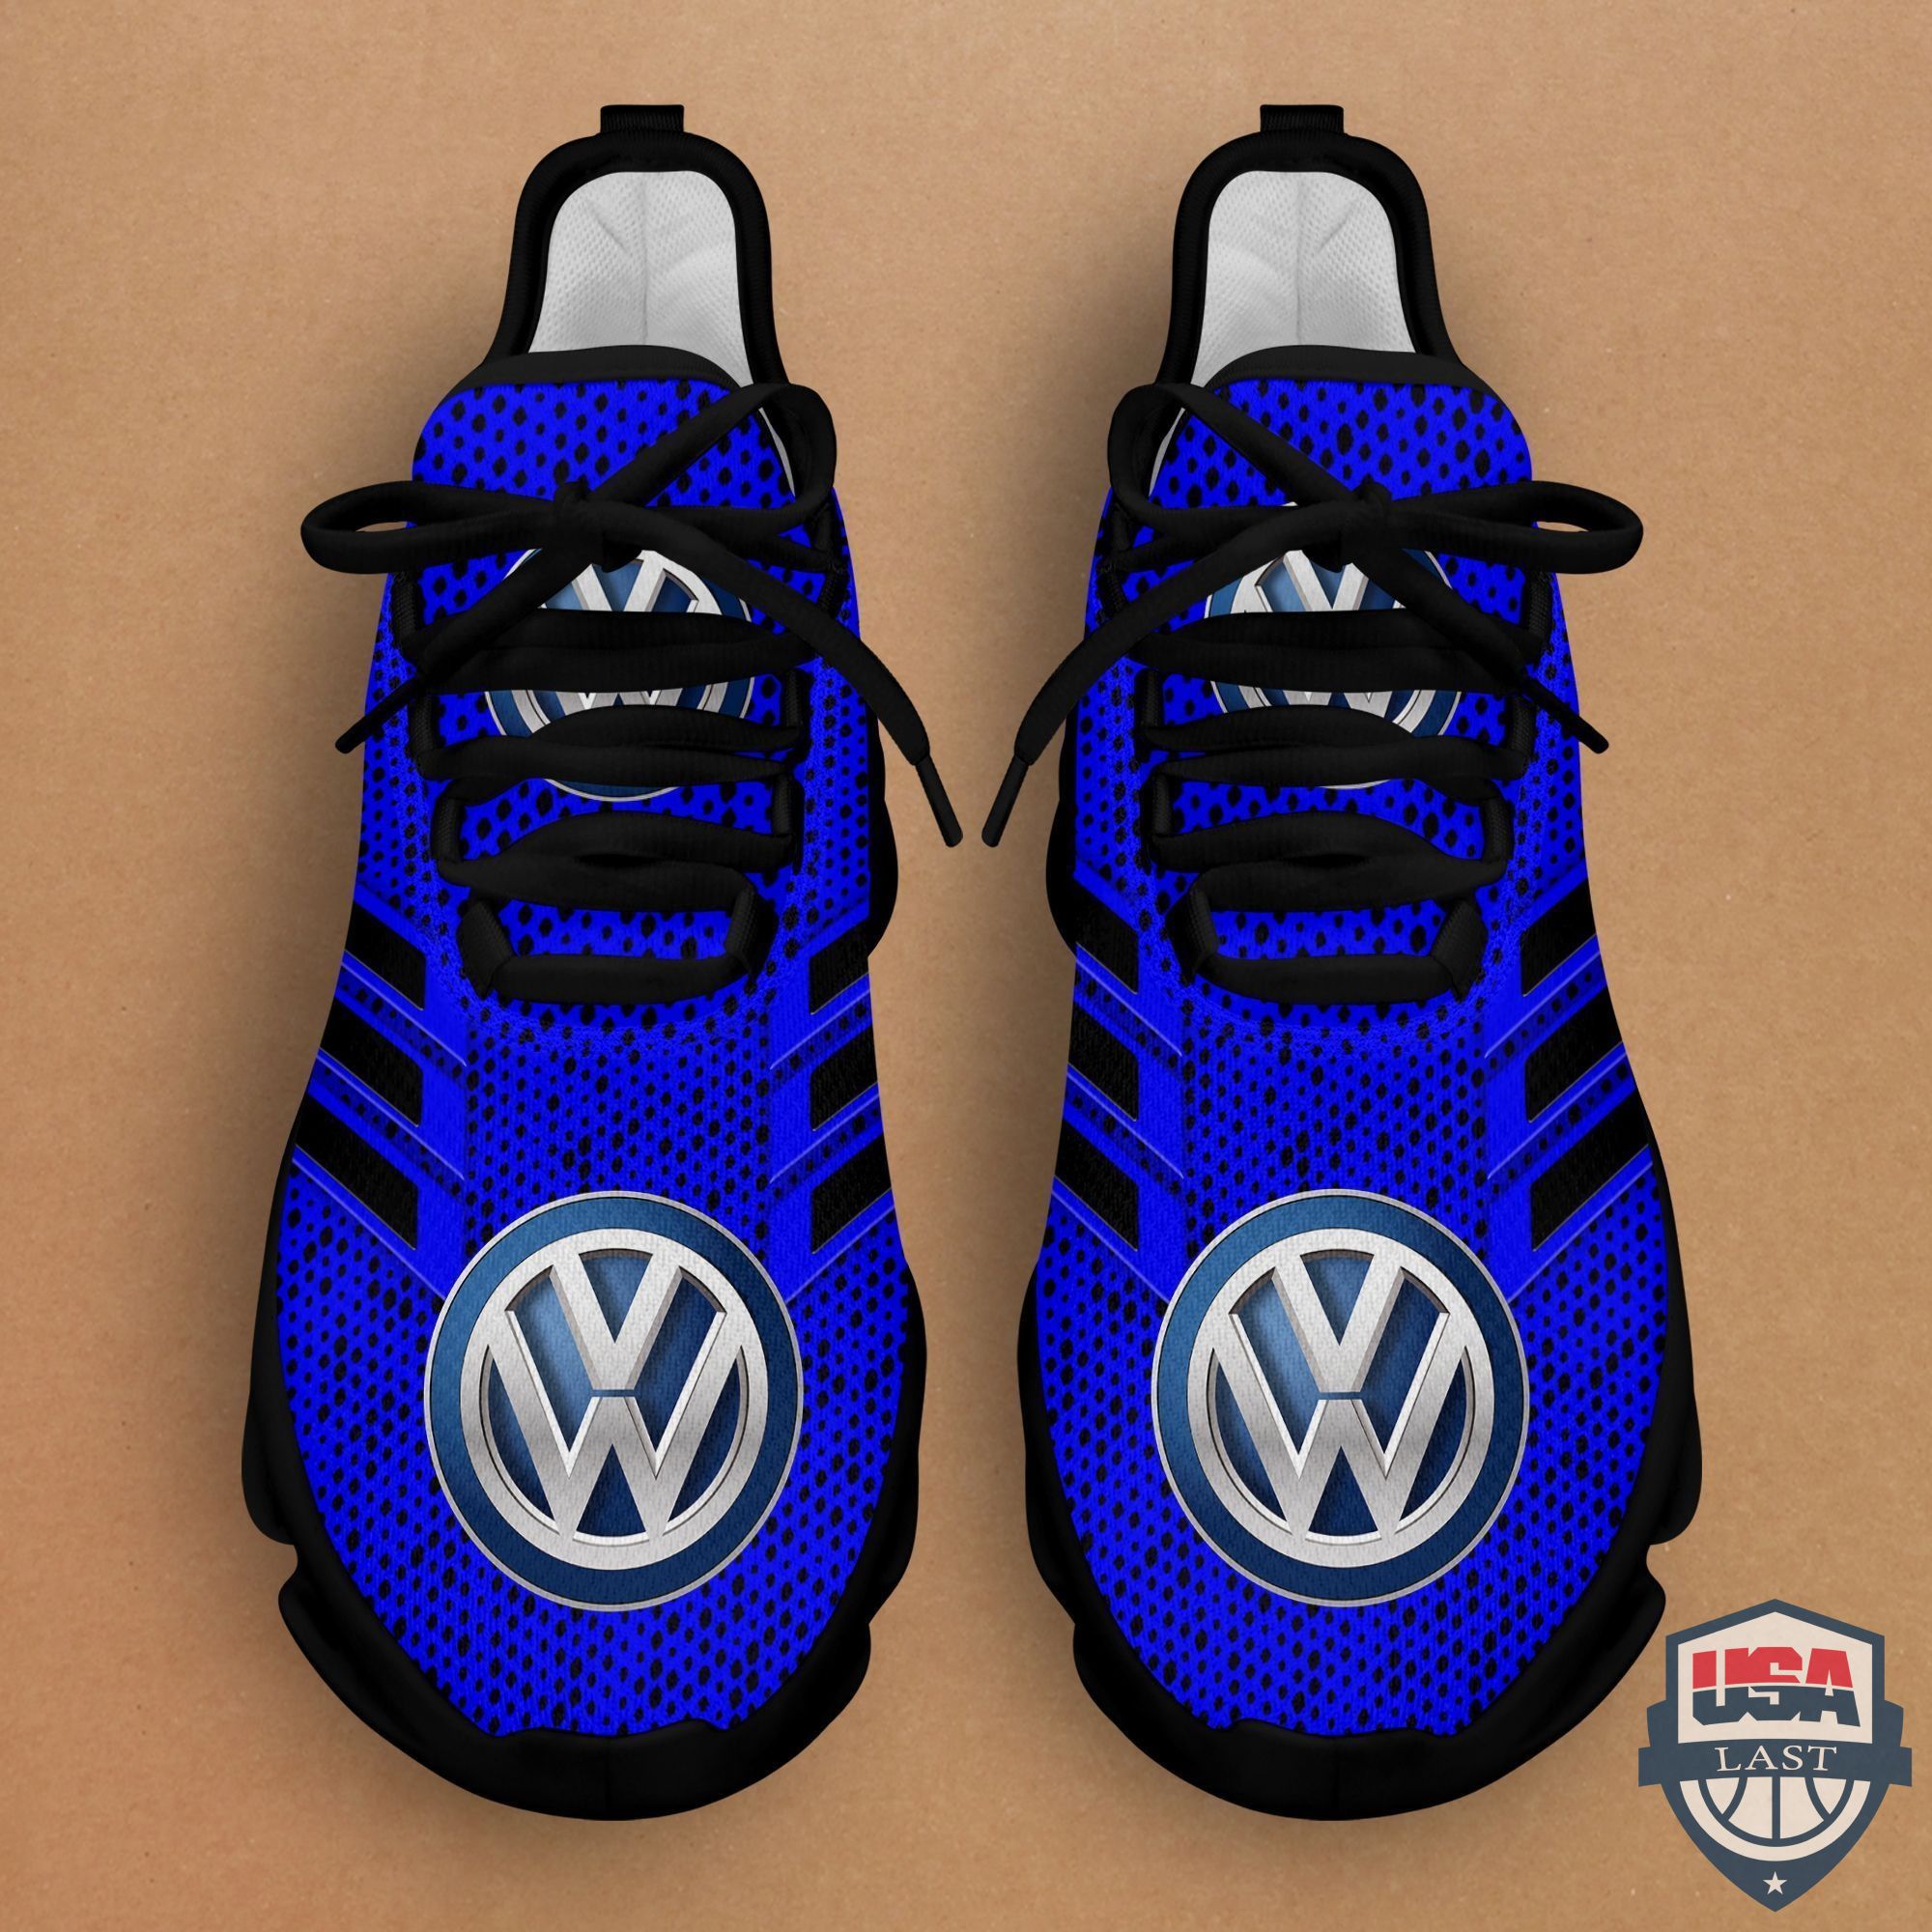 Volkswagen Sneaker Max Soul Shoes Blue Version